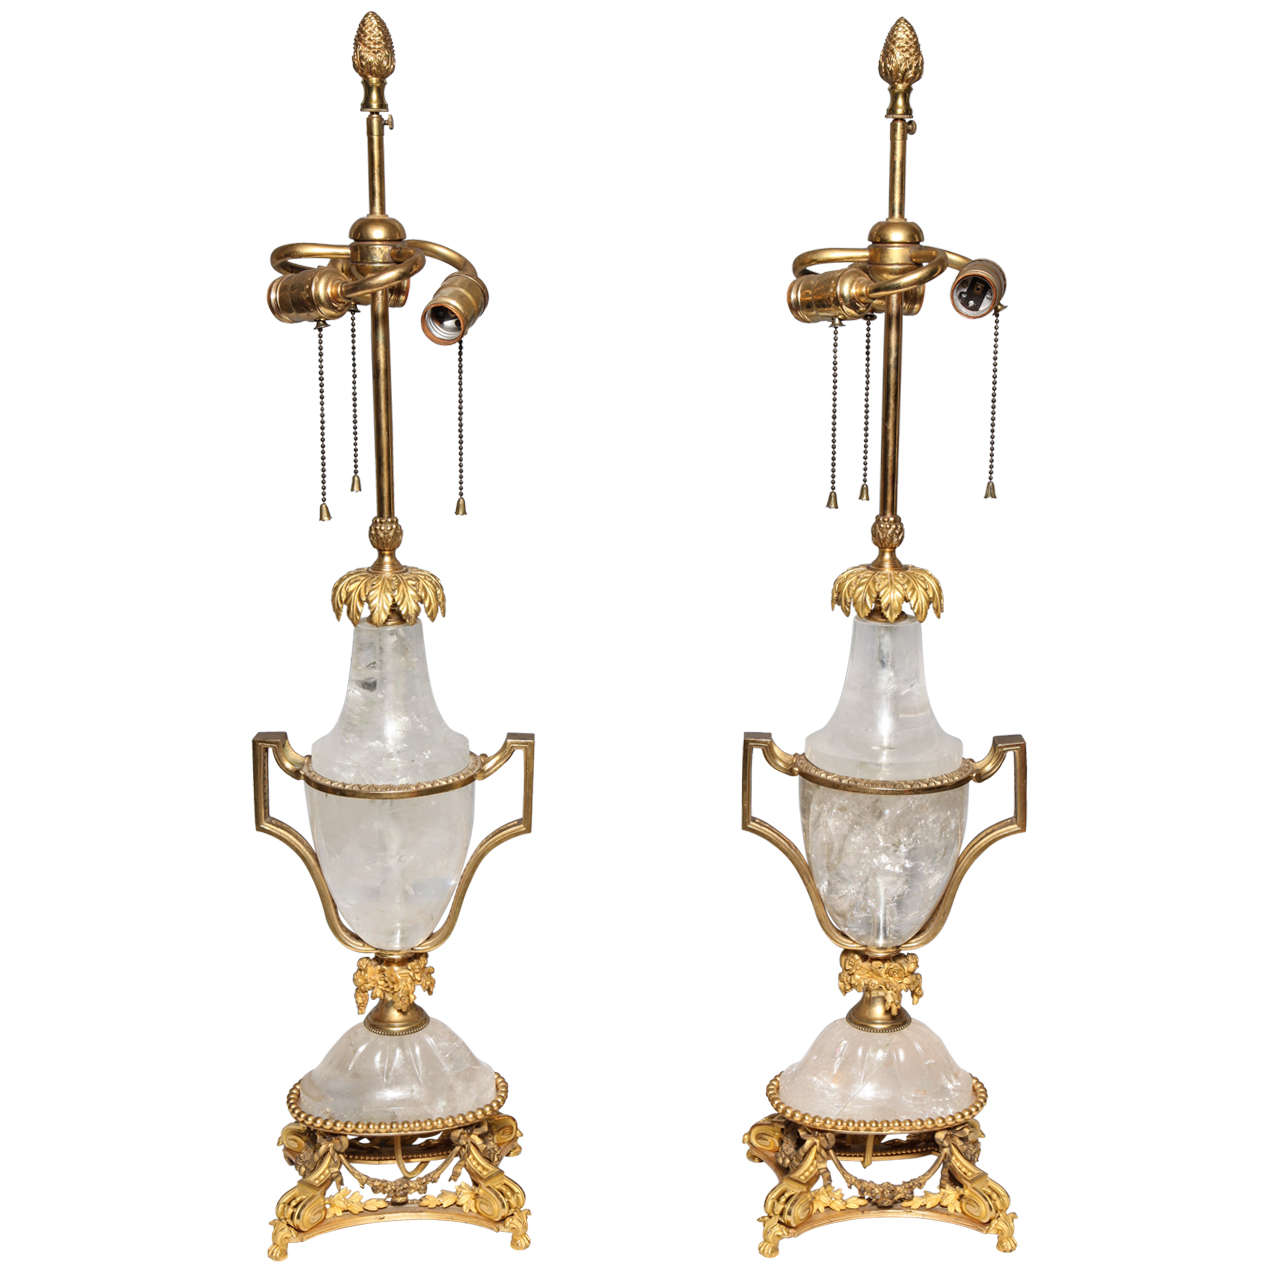 Pair of Unique Antique French Louis XVI Style Gilt Bronze & Rock Crystal Lamps